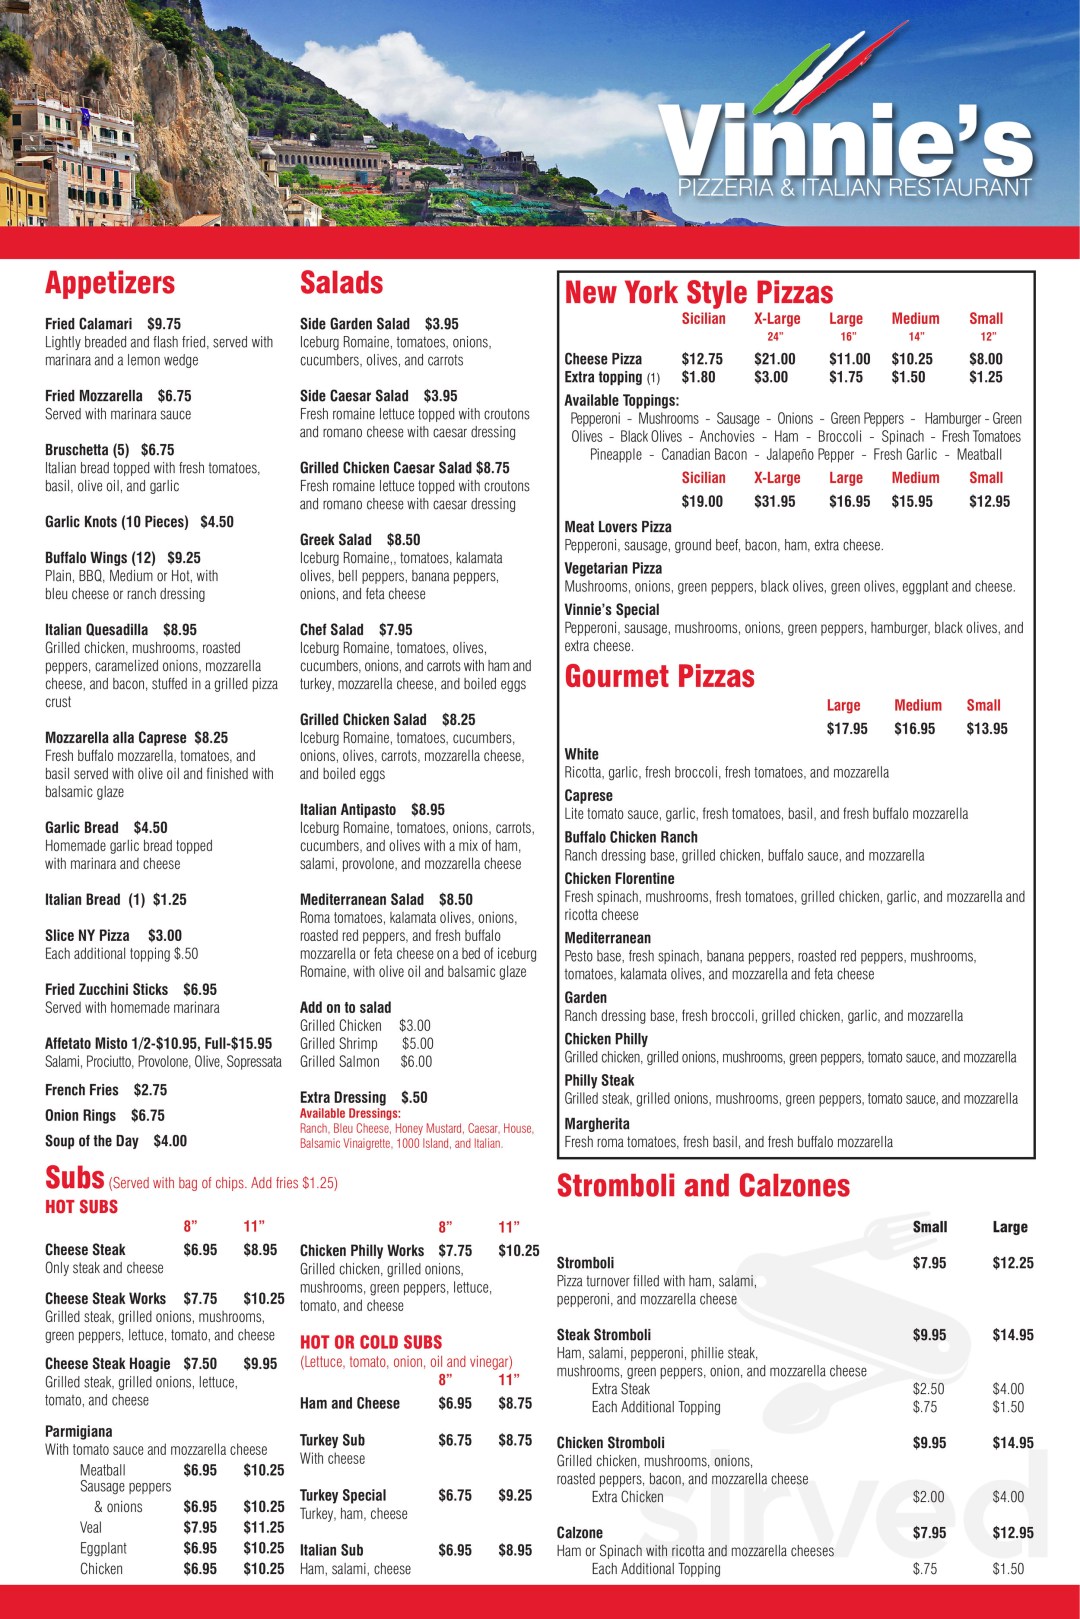 Picture of: Vinnie’s Pizzeria and Italian Restaurant menu in Winston-Salem